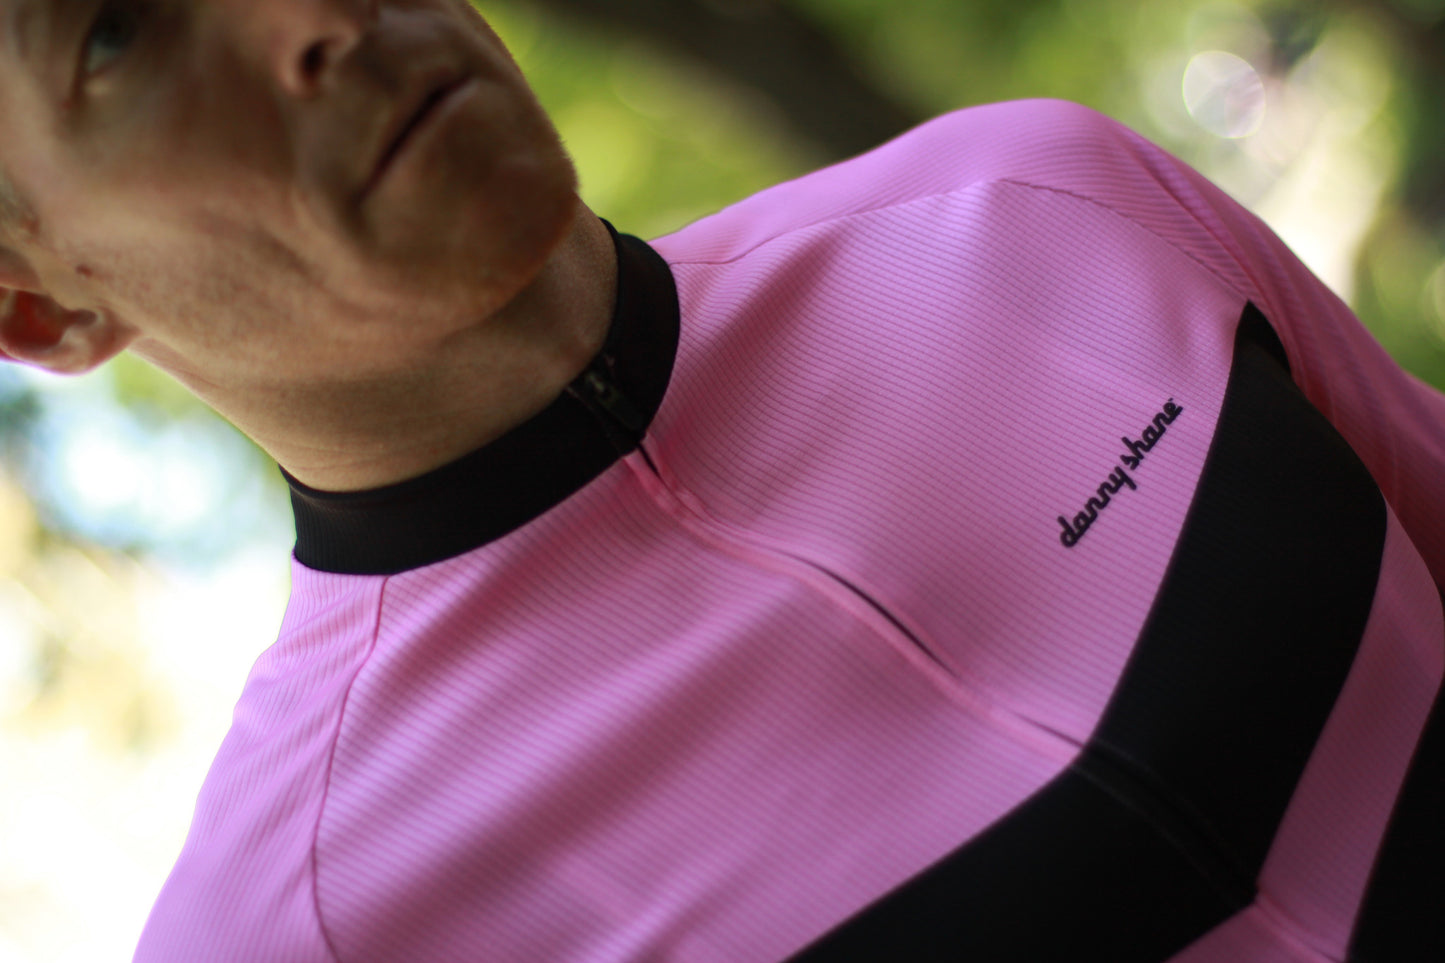 Aston Performance Jersey - Pink